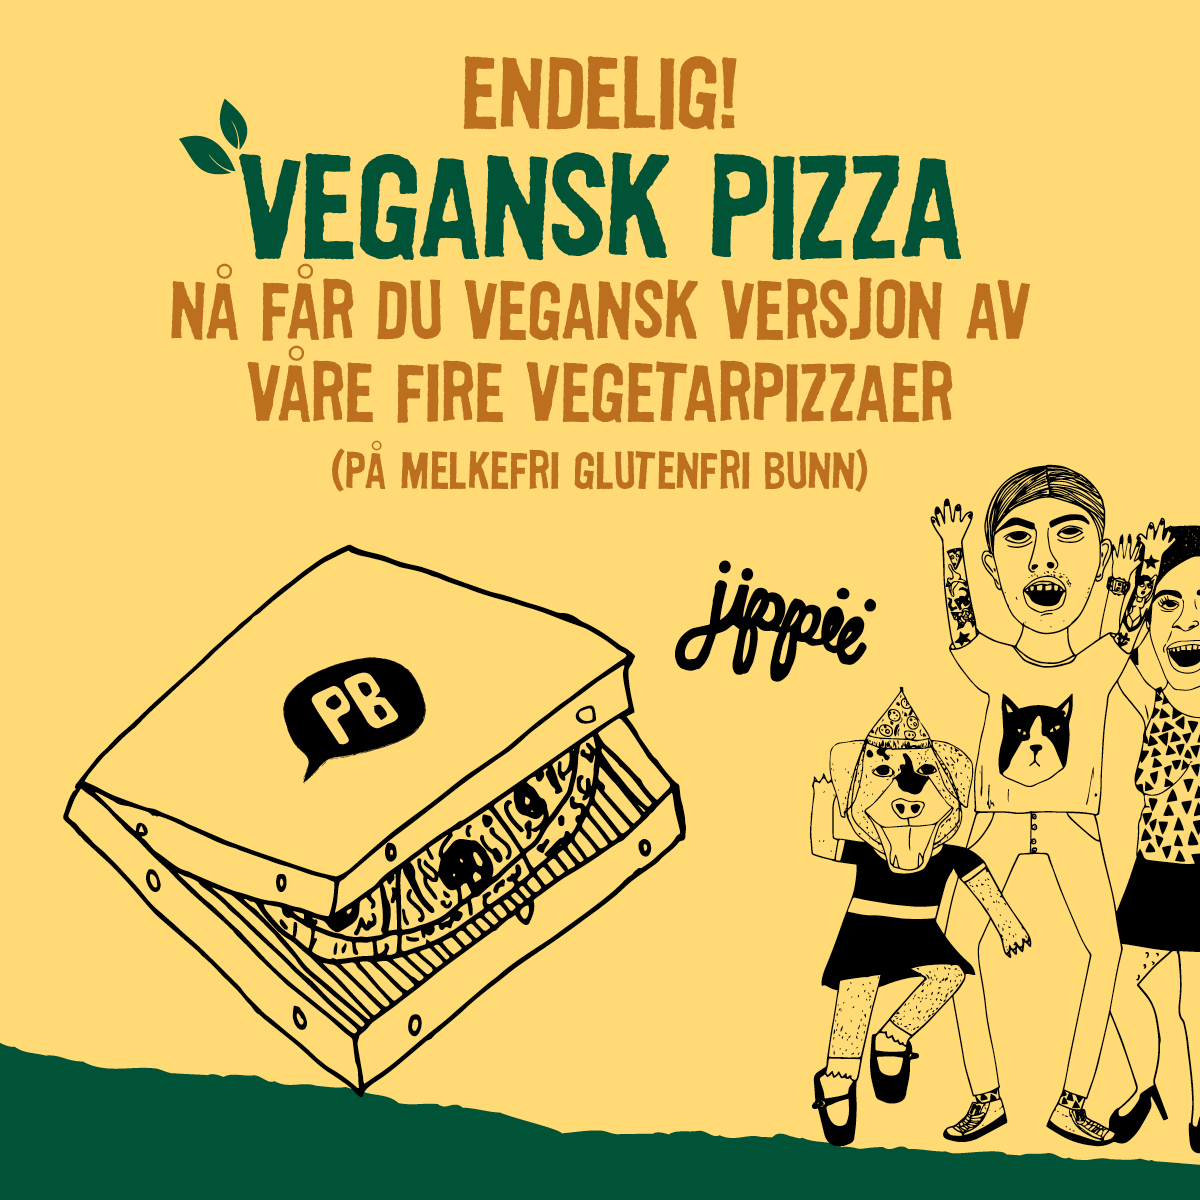 Pizzabakeren, Vegansk pizza, pizzabakeren vegansk pizza